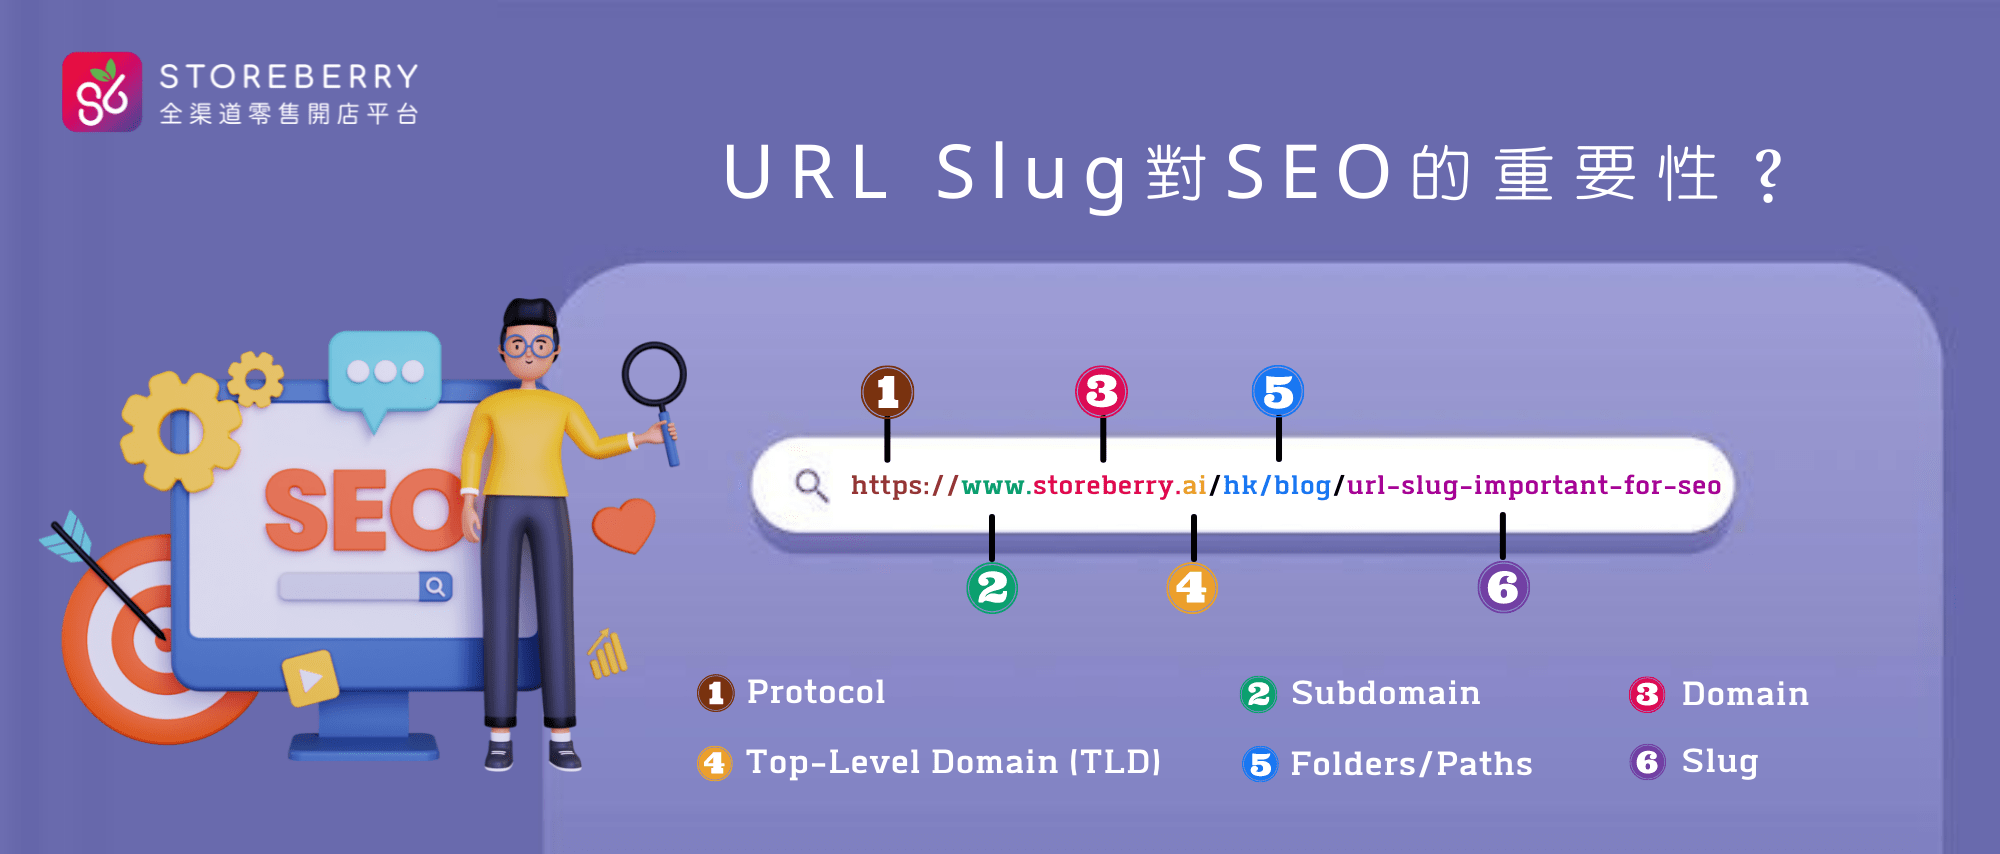  Storeberry | 什麼是 URL Slug ? 對 SEO 的重要性及該如何優化？  